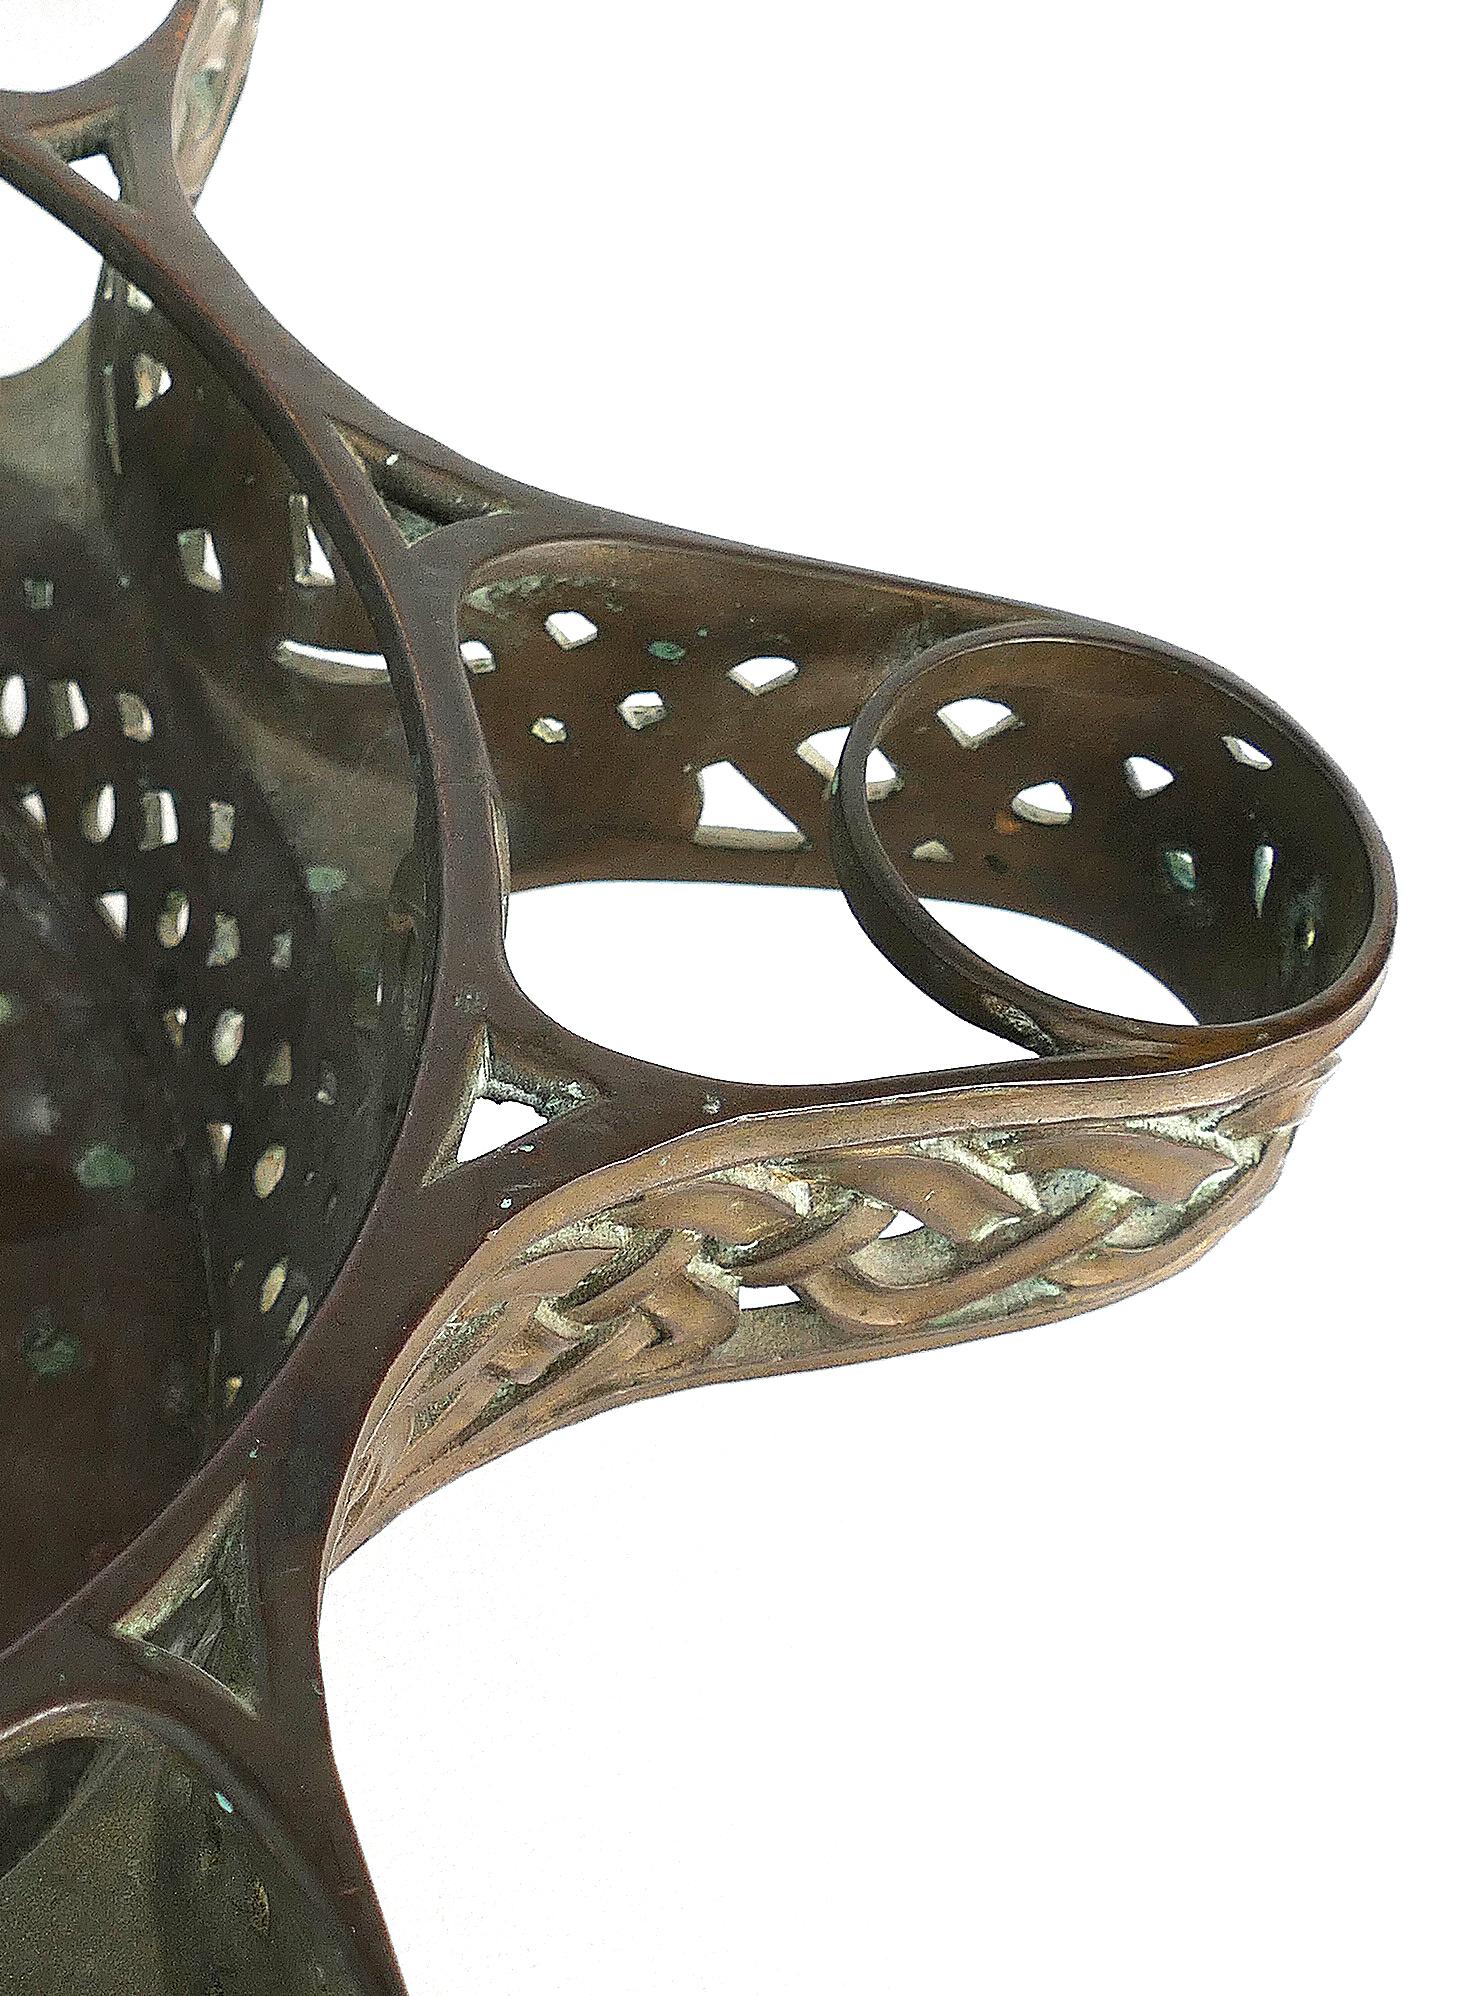 Tiffany Studios Bronze Centerpiece Bowl, Signed 6